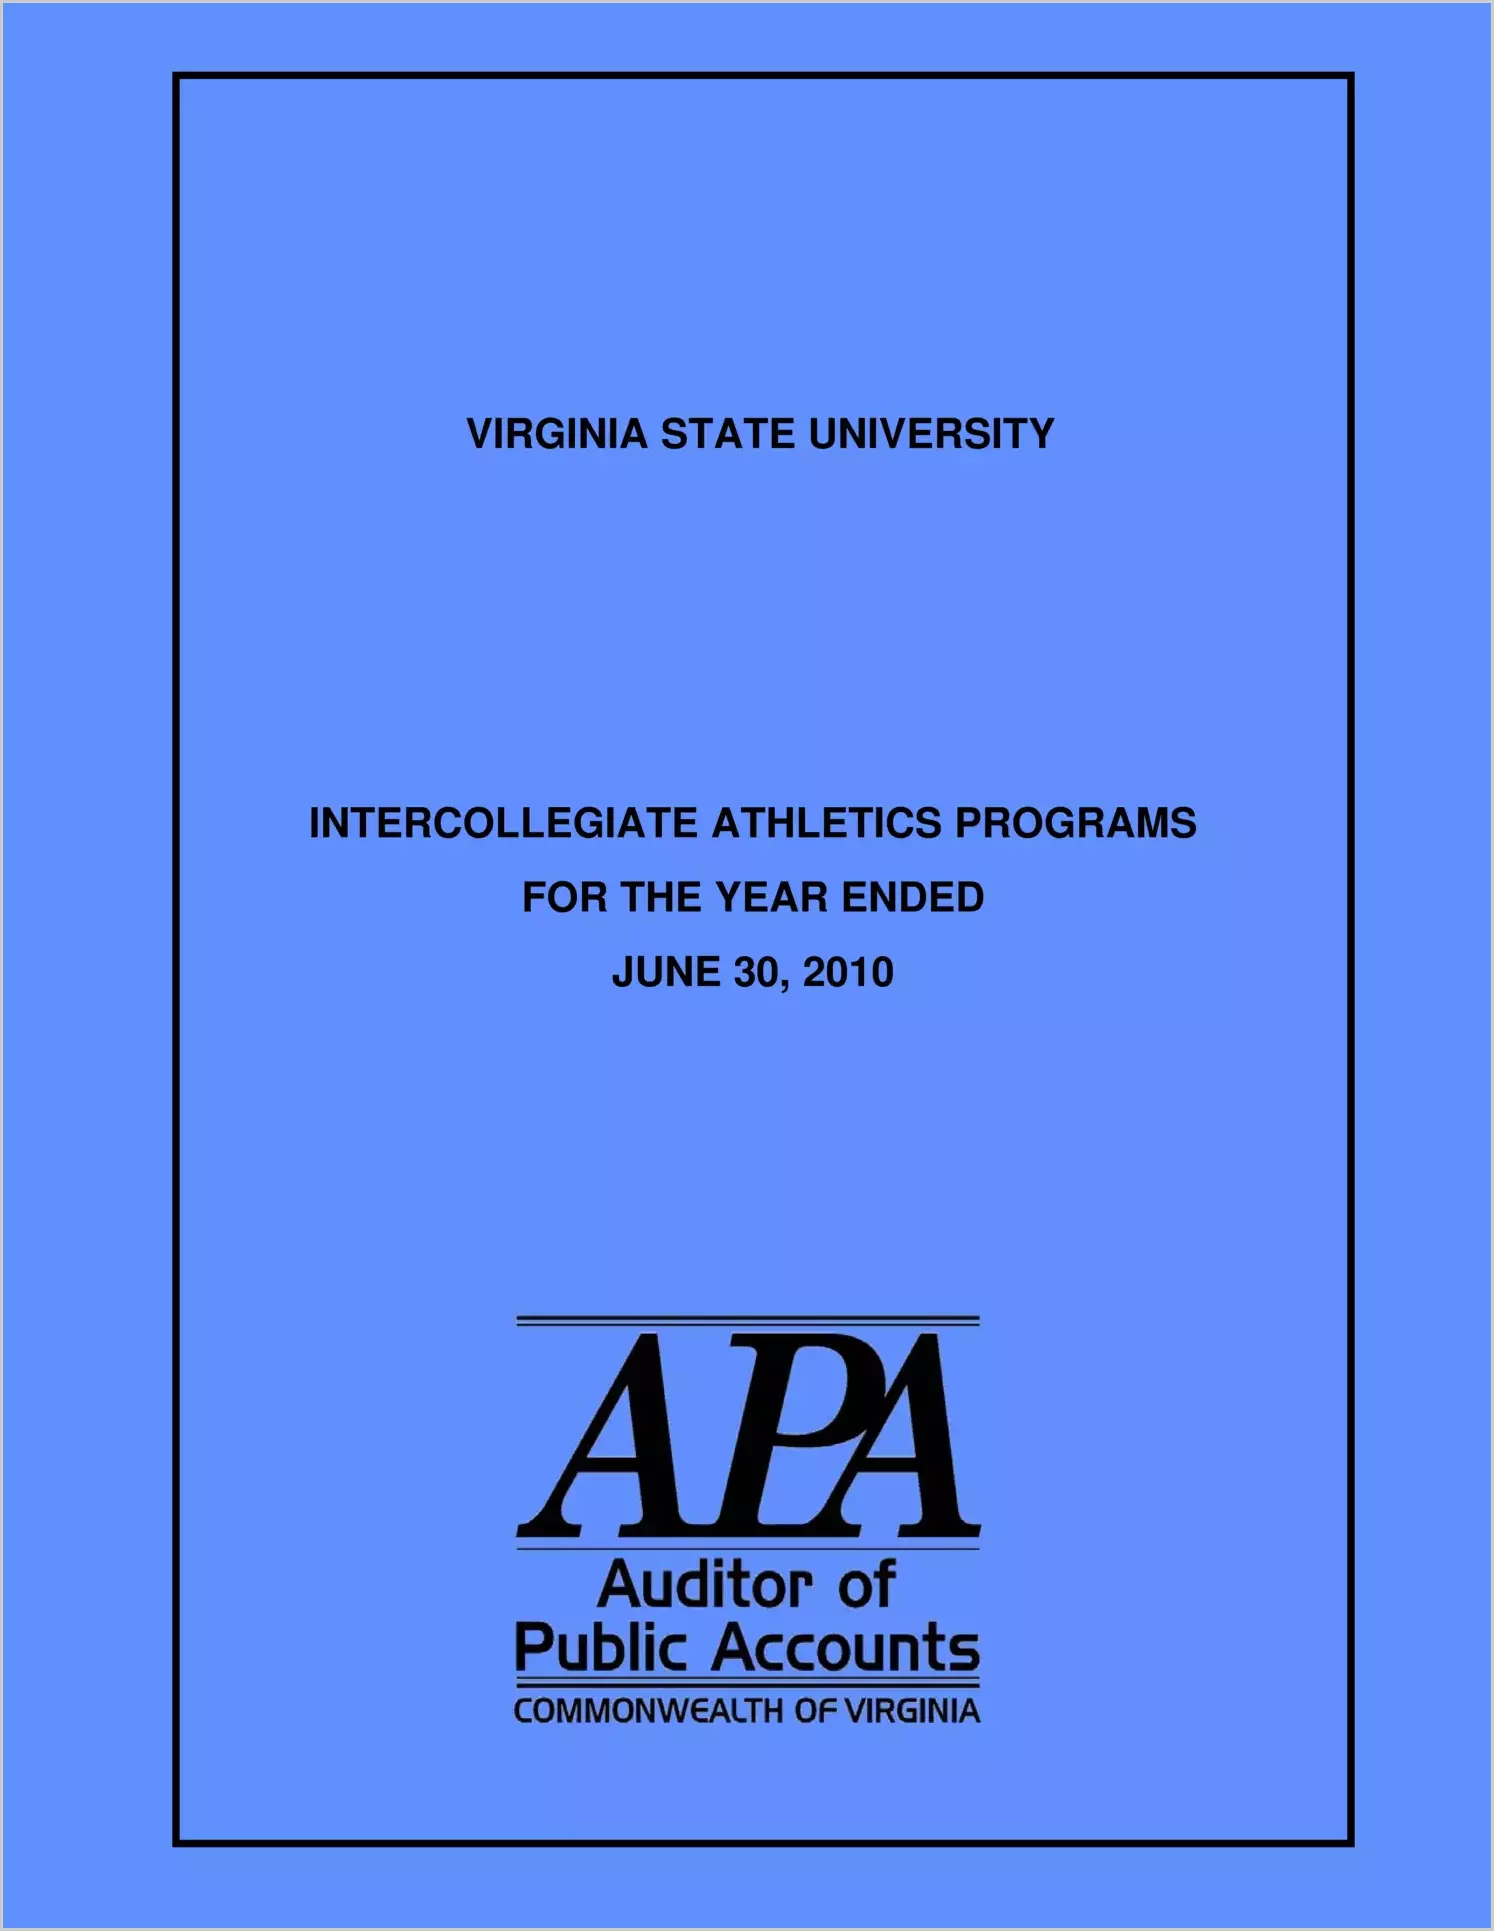 Virginia State University Intercollegiate Athletics Programs for the year ended June 30, 2010